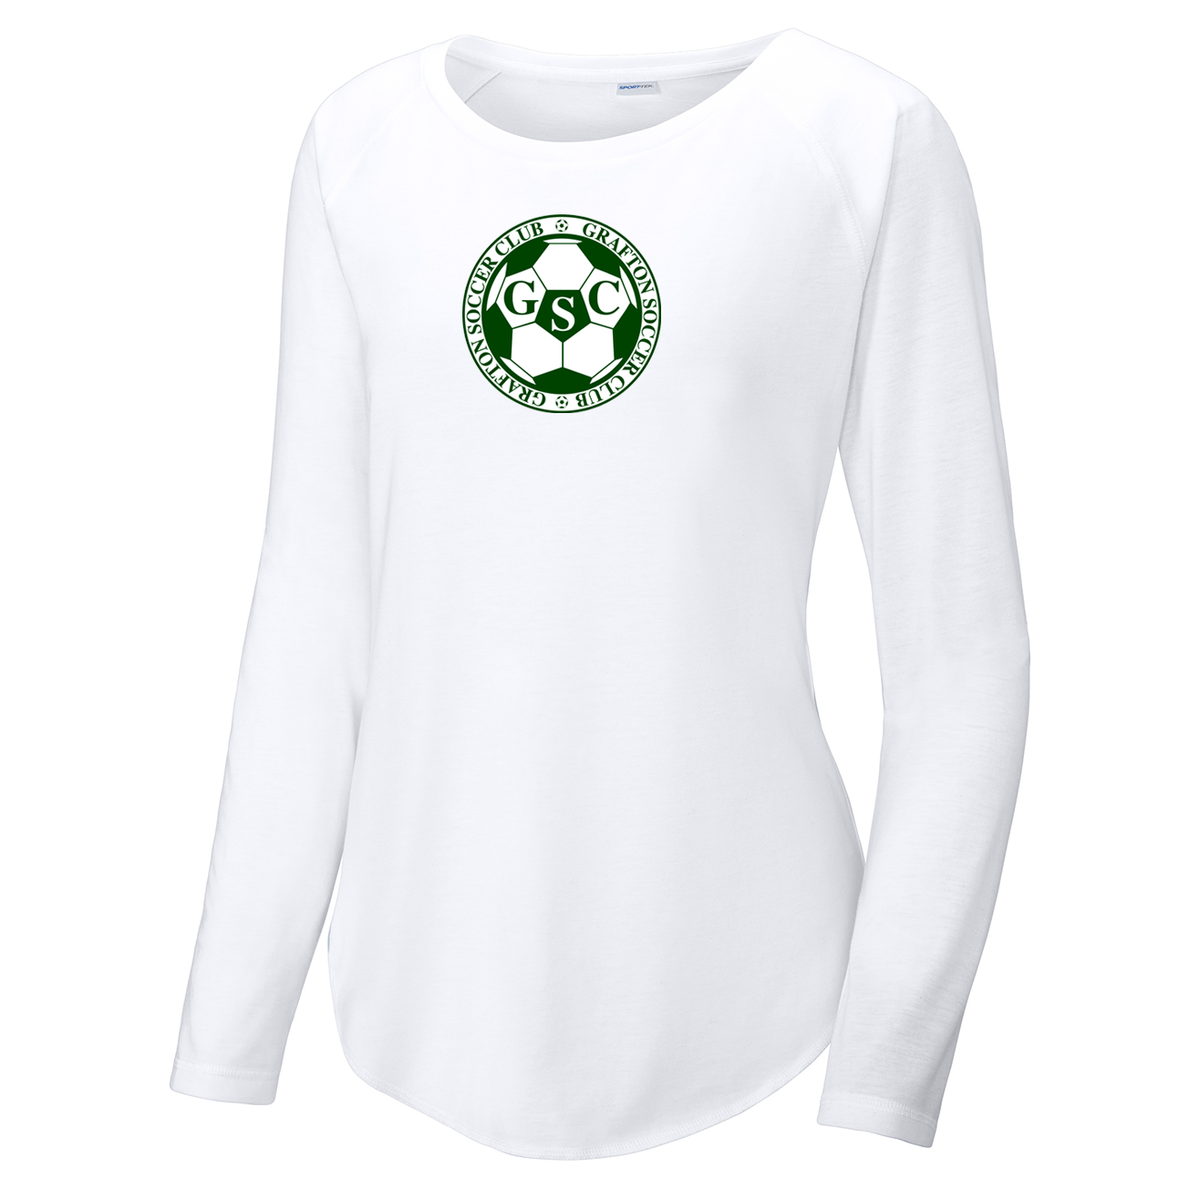 Grafton Youth Soccer Club Women's Raglan Long Sleeve CottonTouch